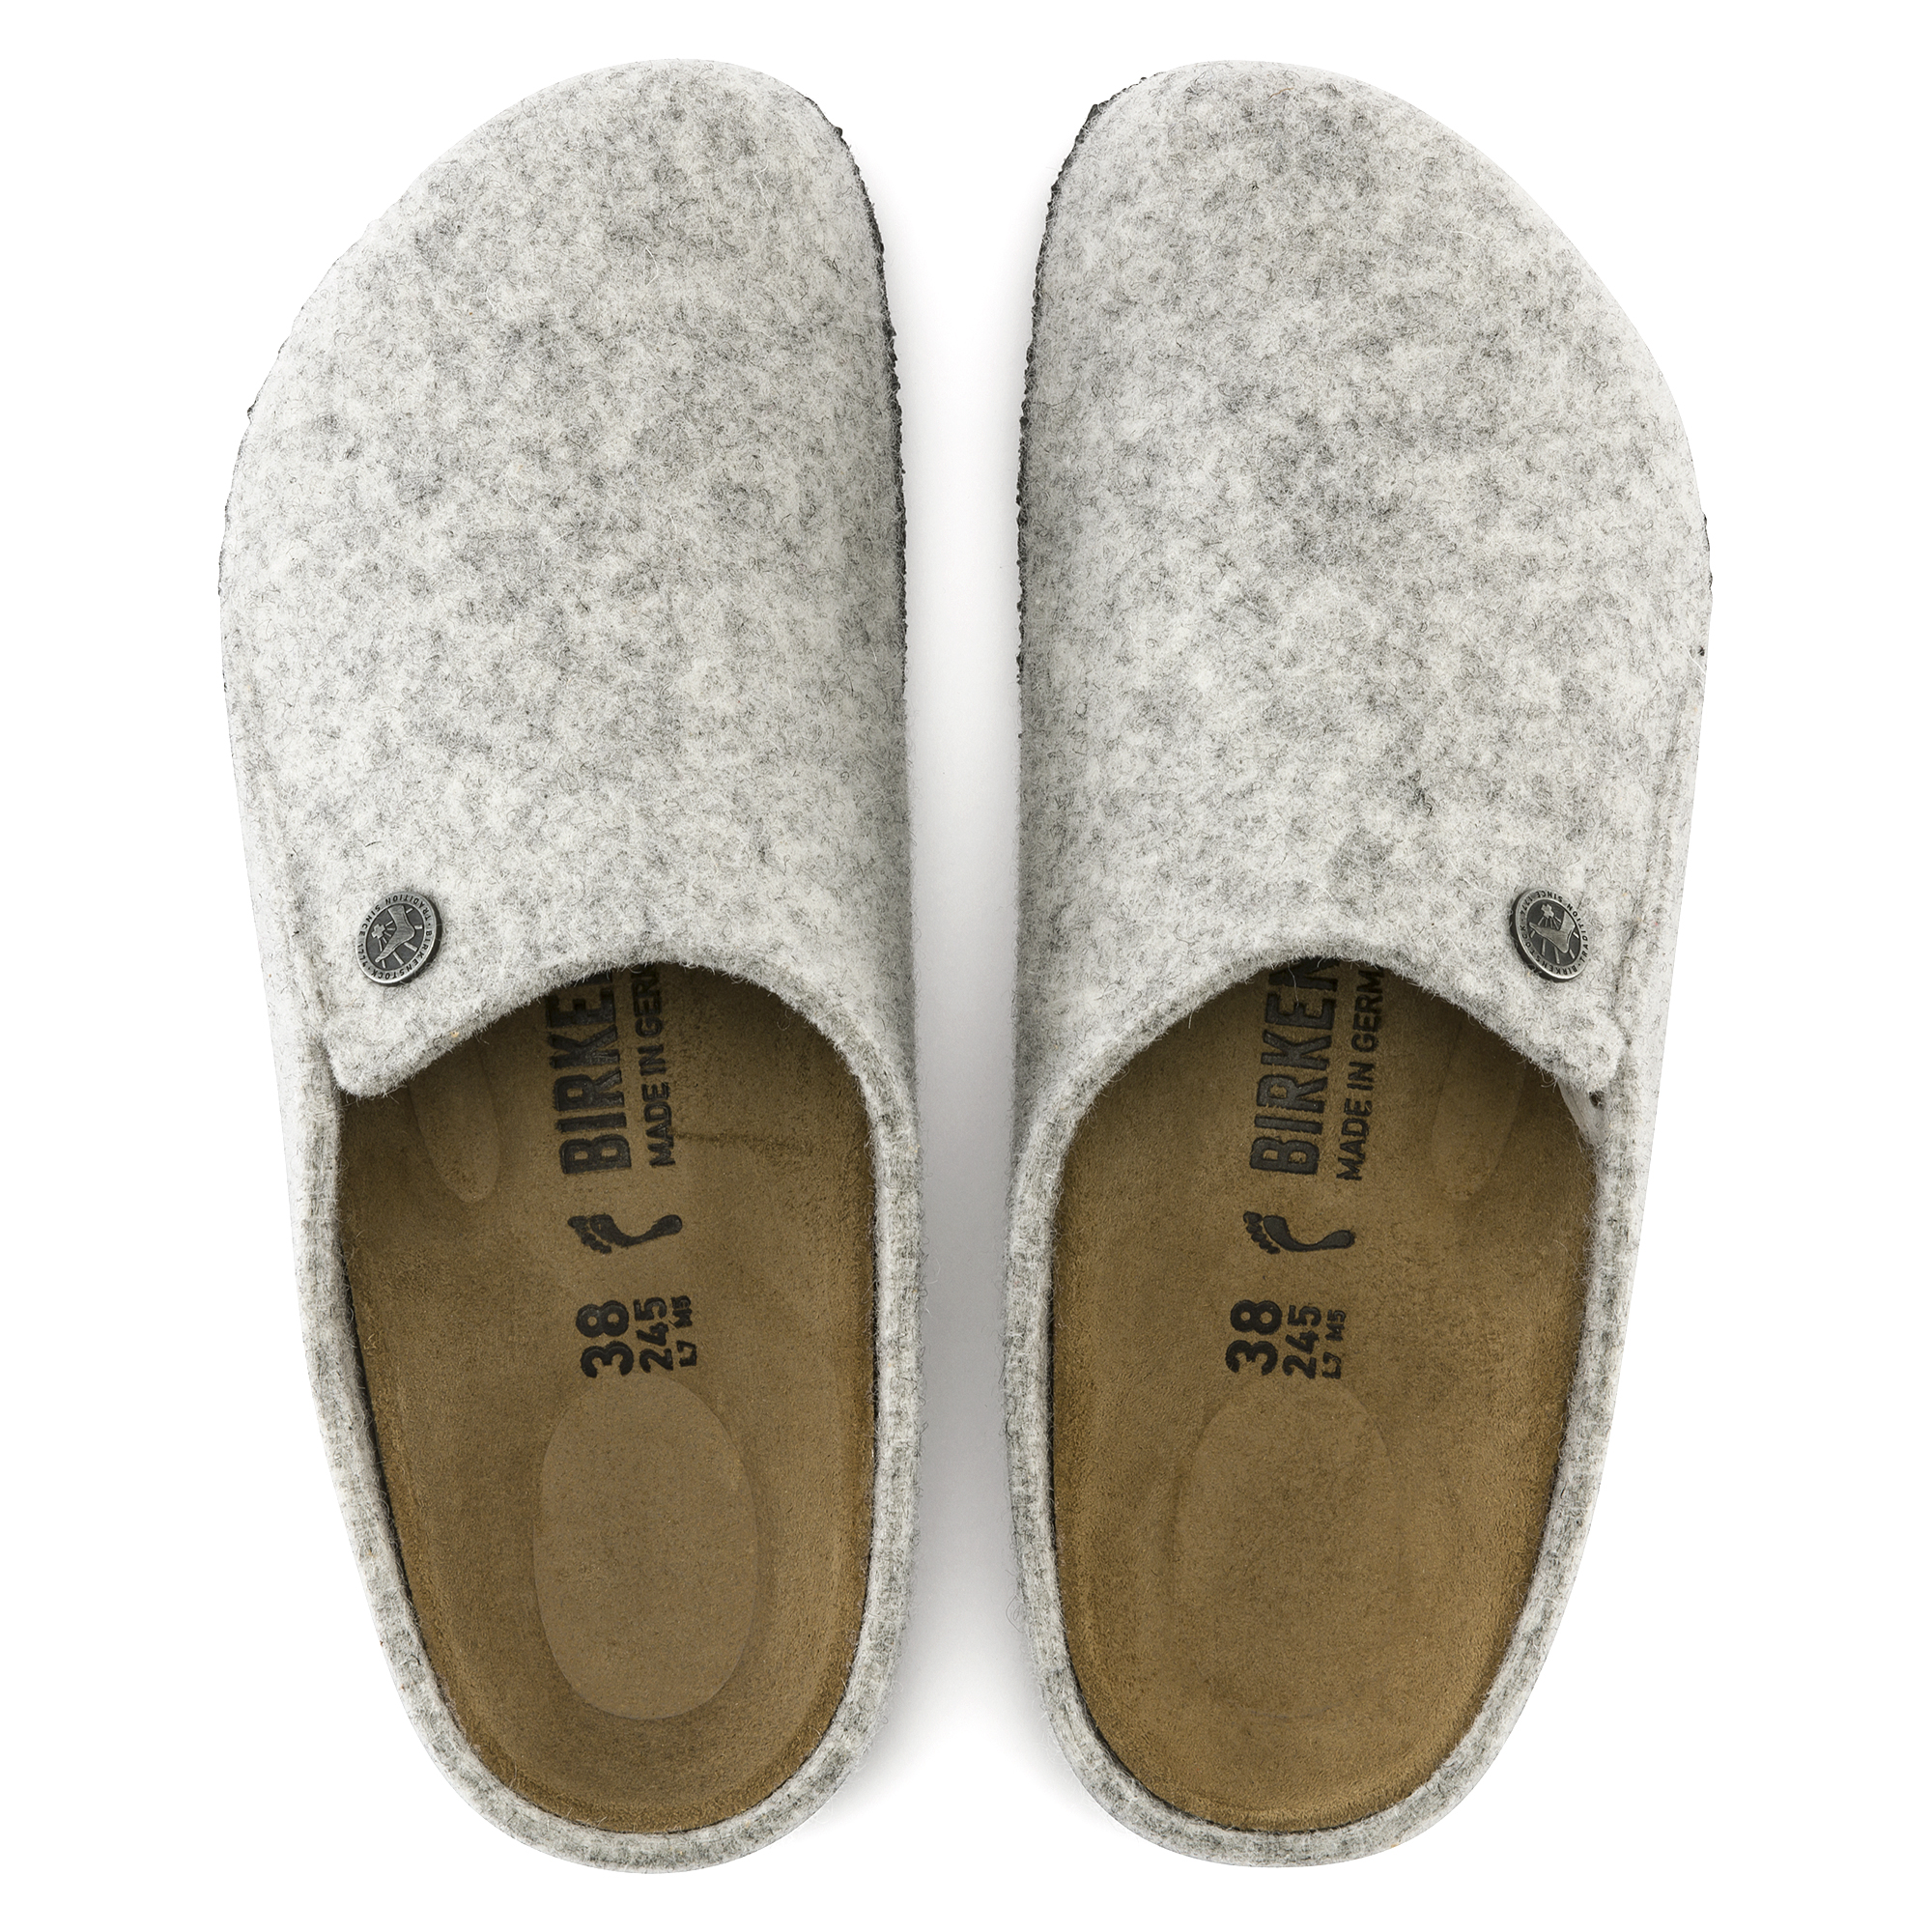 Zermatt Wool Felt Light Grey | shop 